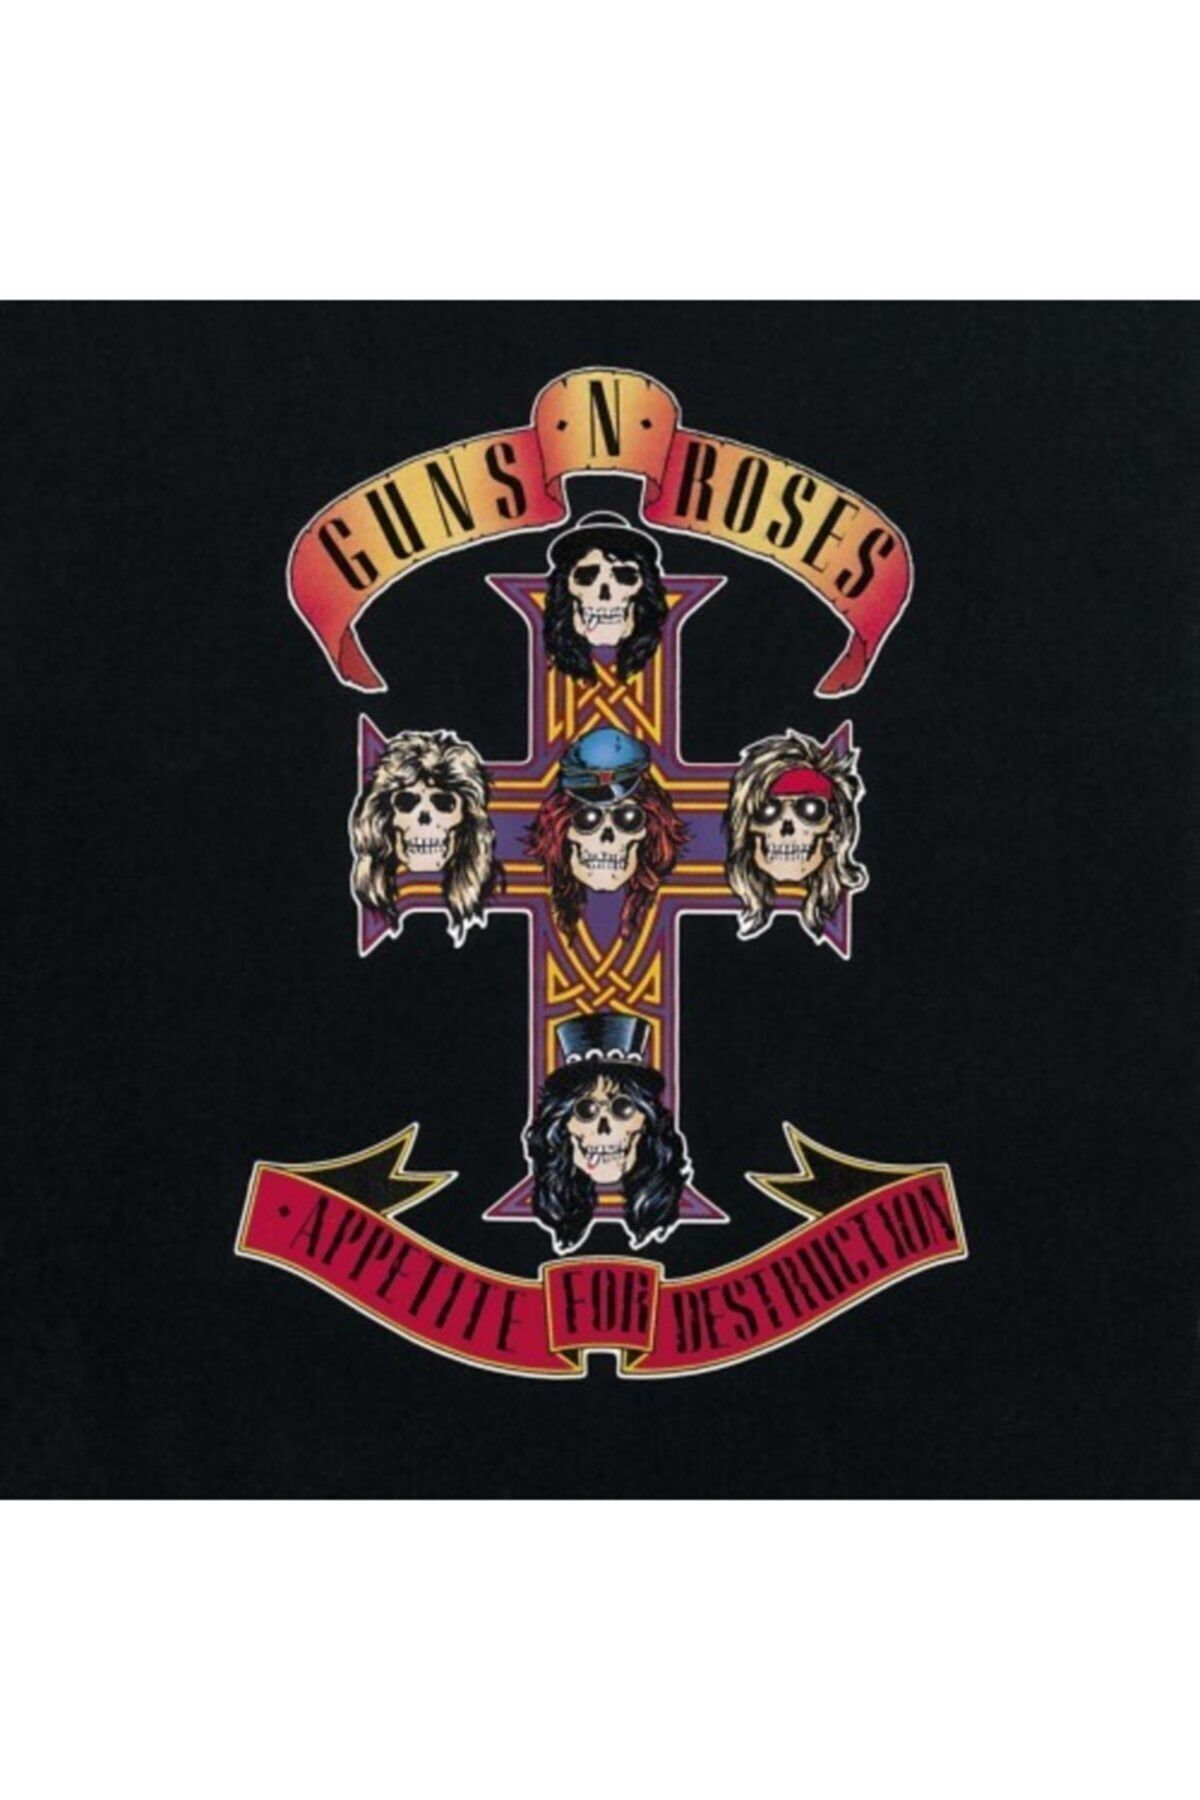 Genel Markalar Yabancı Plak - Guns N Roses / Appetite For Destruction